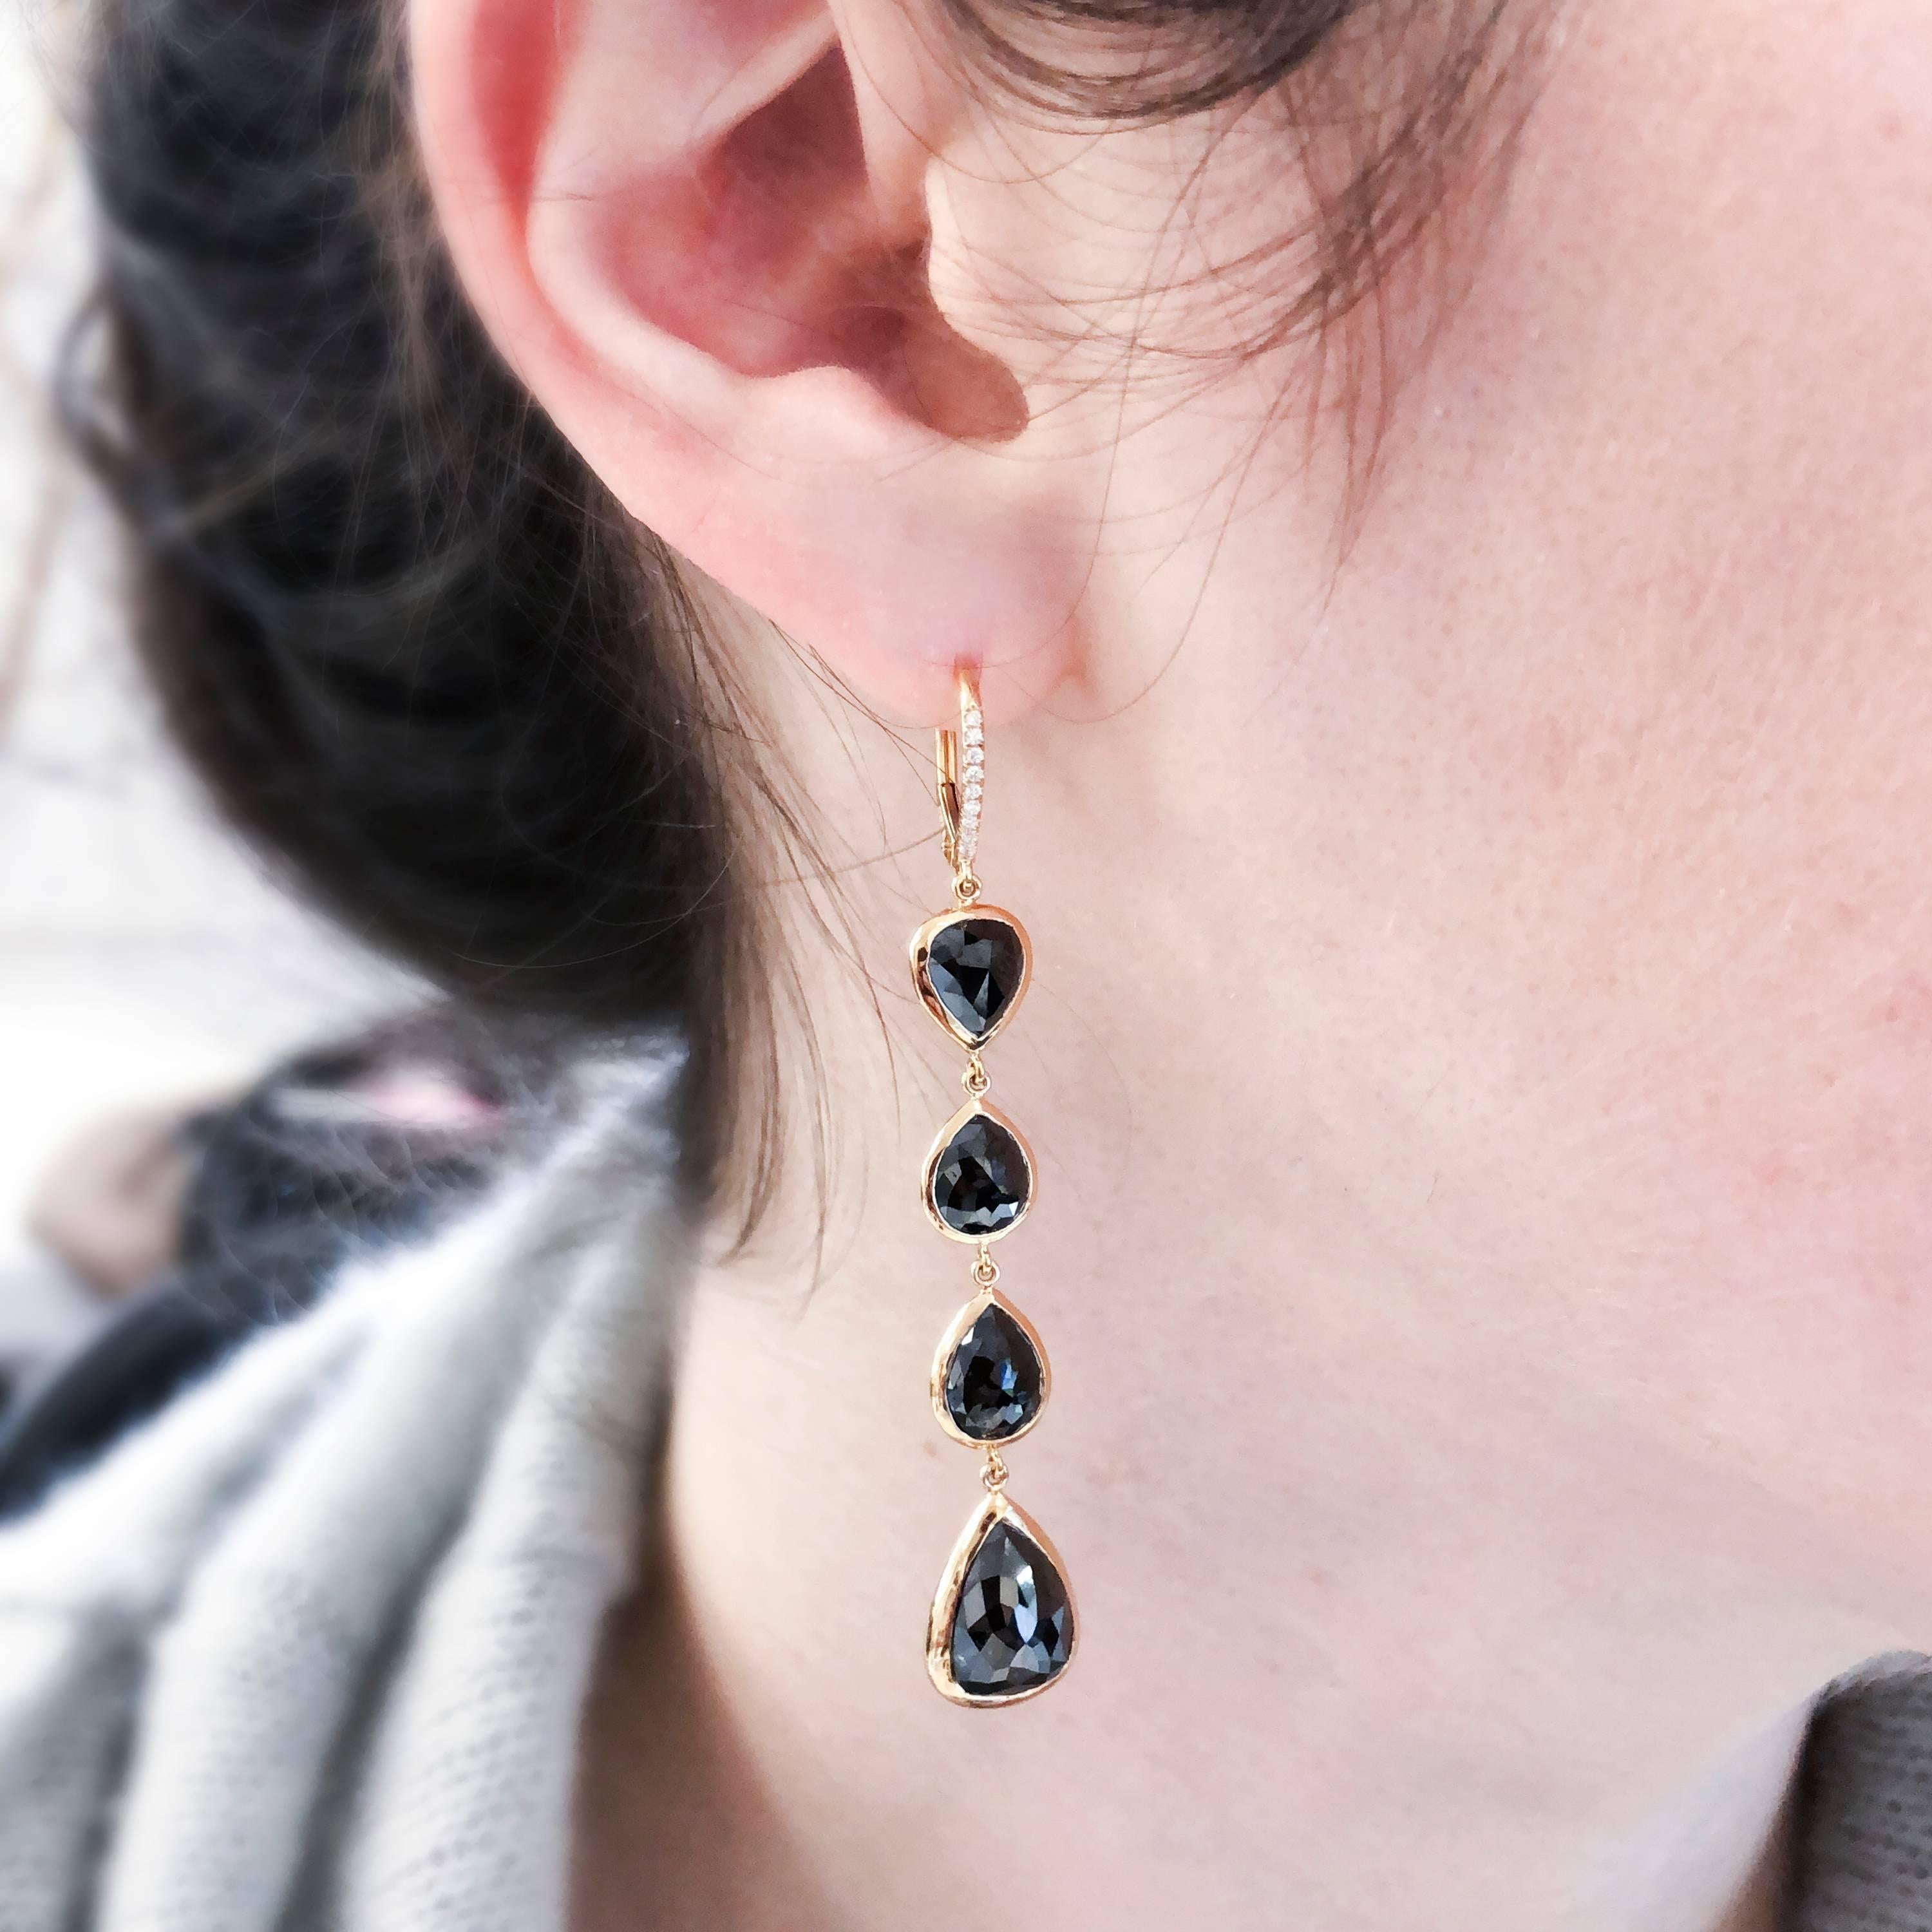 Bezel set diamond drop earrings 
13.04 ctw black diamond HPHT pearshapes (8 stones) 
Bezel wrapped in 18k rose gold, on leverbacks with 0.16 tw (18 stones) 